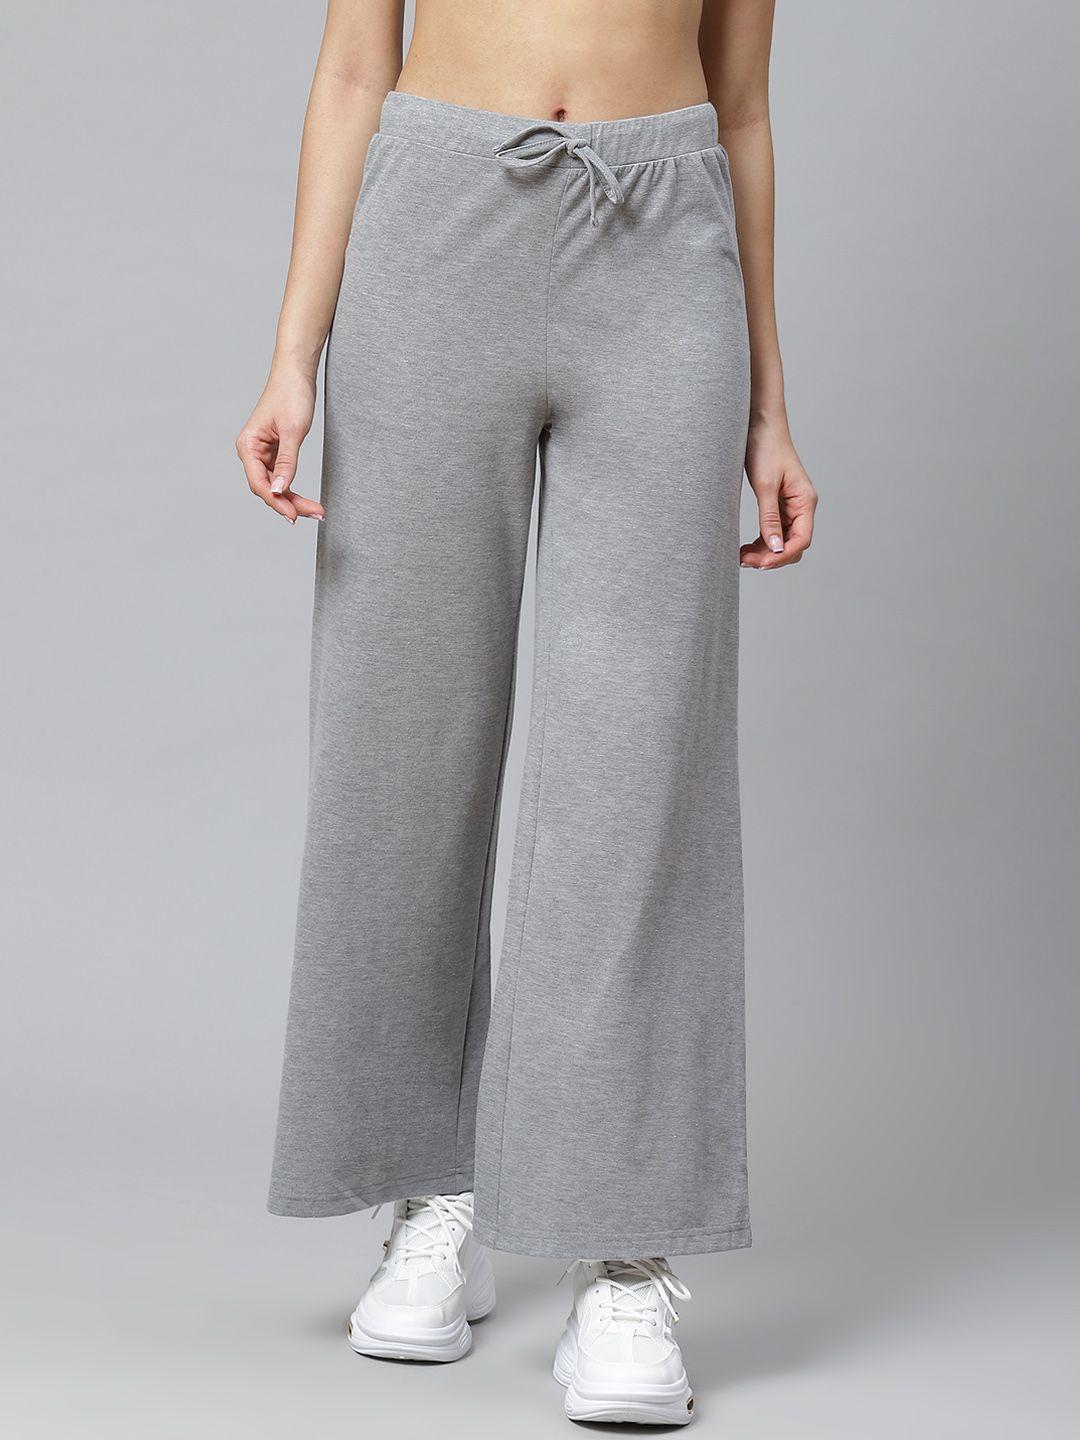 hubberholme-women-grey-melange-solid-knitted-track-pants